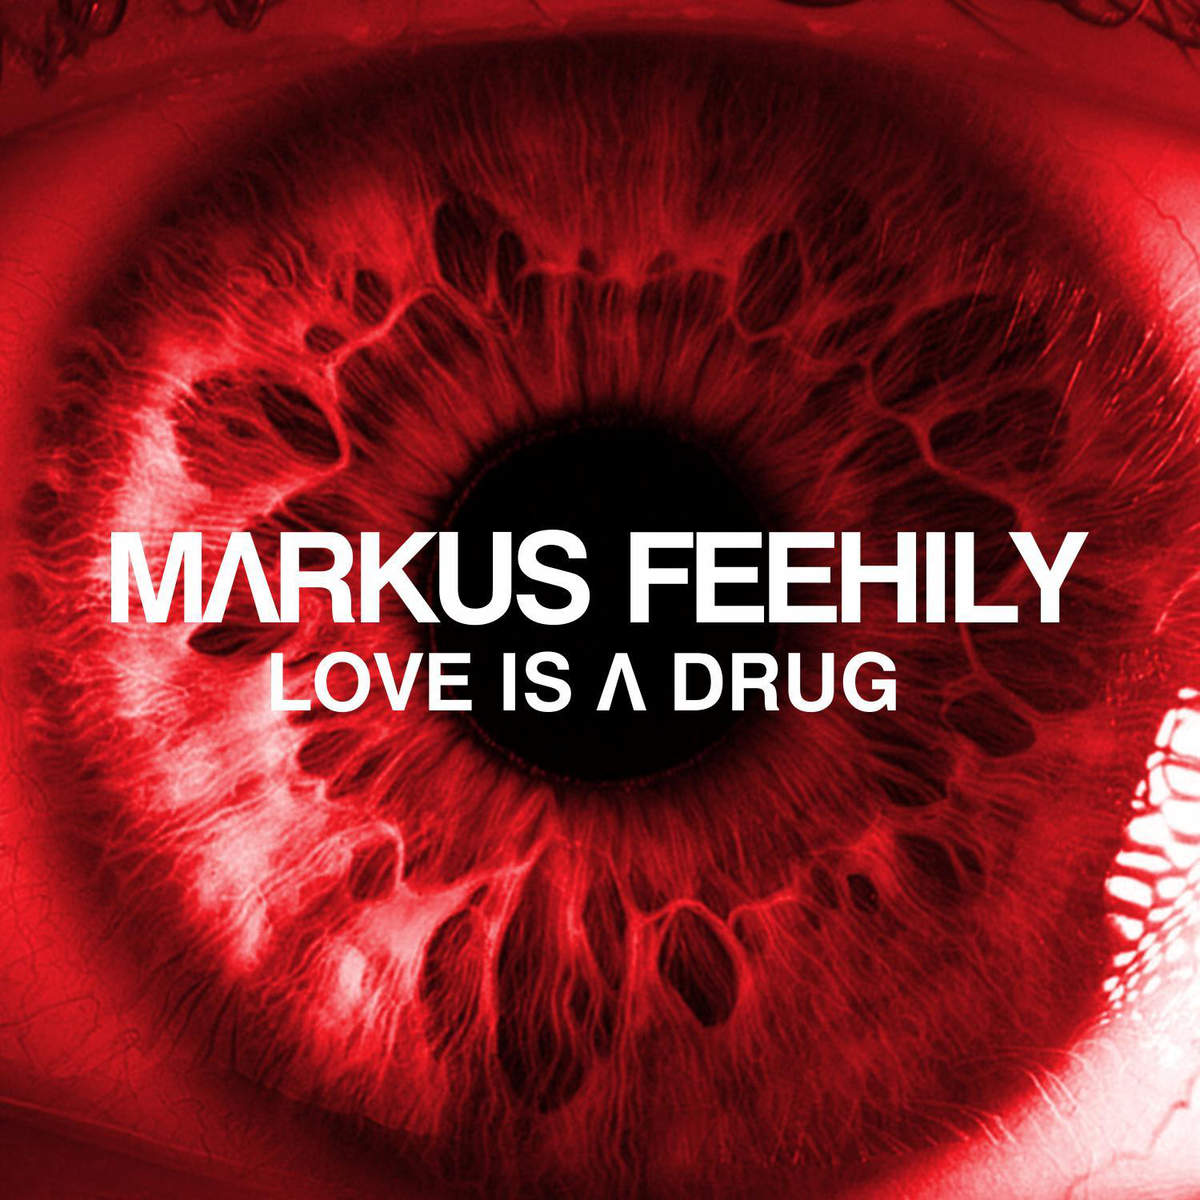 Друг лов. Love is drugs. Love is a drug Markus Feehily. New Politics Love is a drug. Love drug.